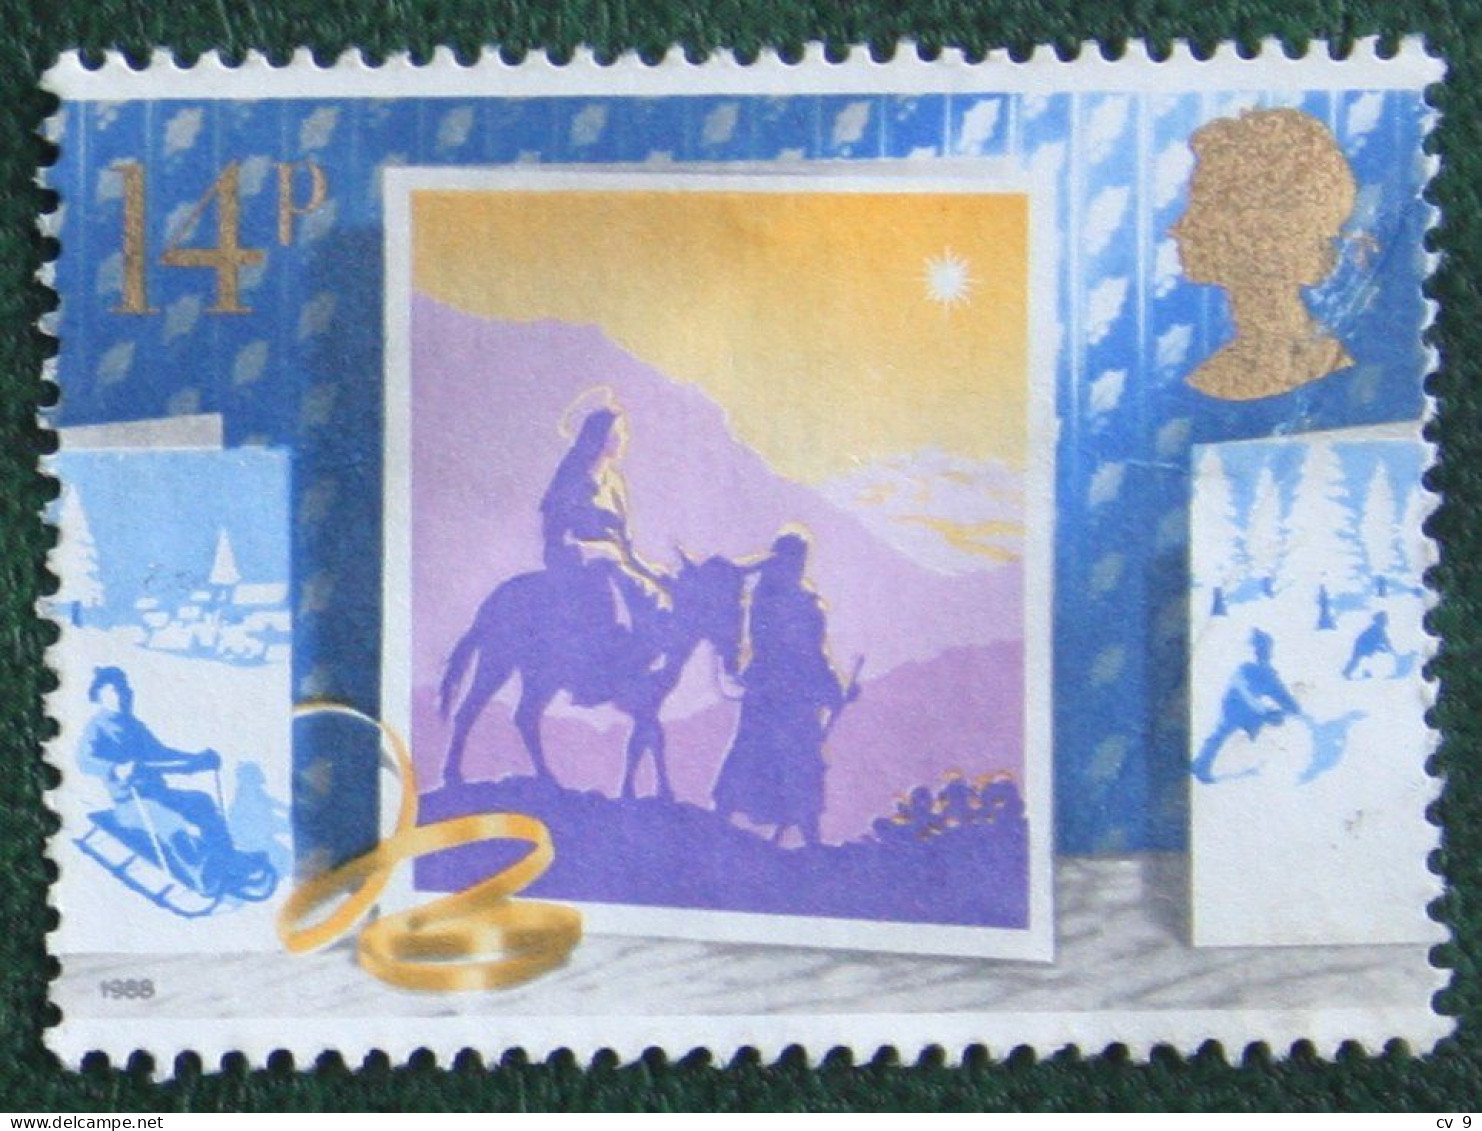 Natale Weihnachten Xmas Noel Kerst (Mi 1180) 1988 Used Gebruikt Oblitere ENGLAND GRANDE-BRETAGNE GB GREAT BRITAIN - Used Stamps